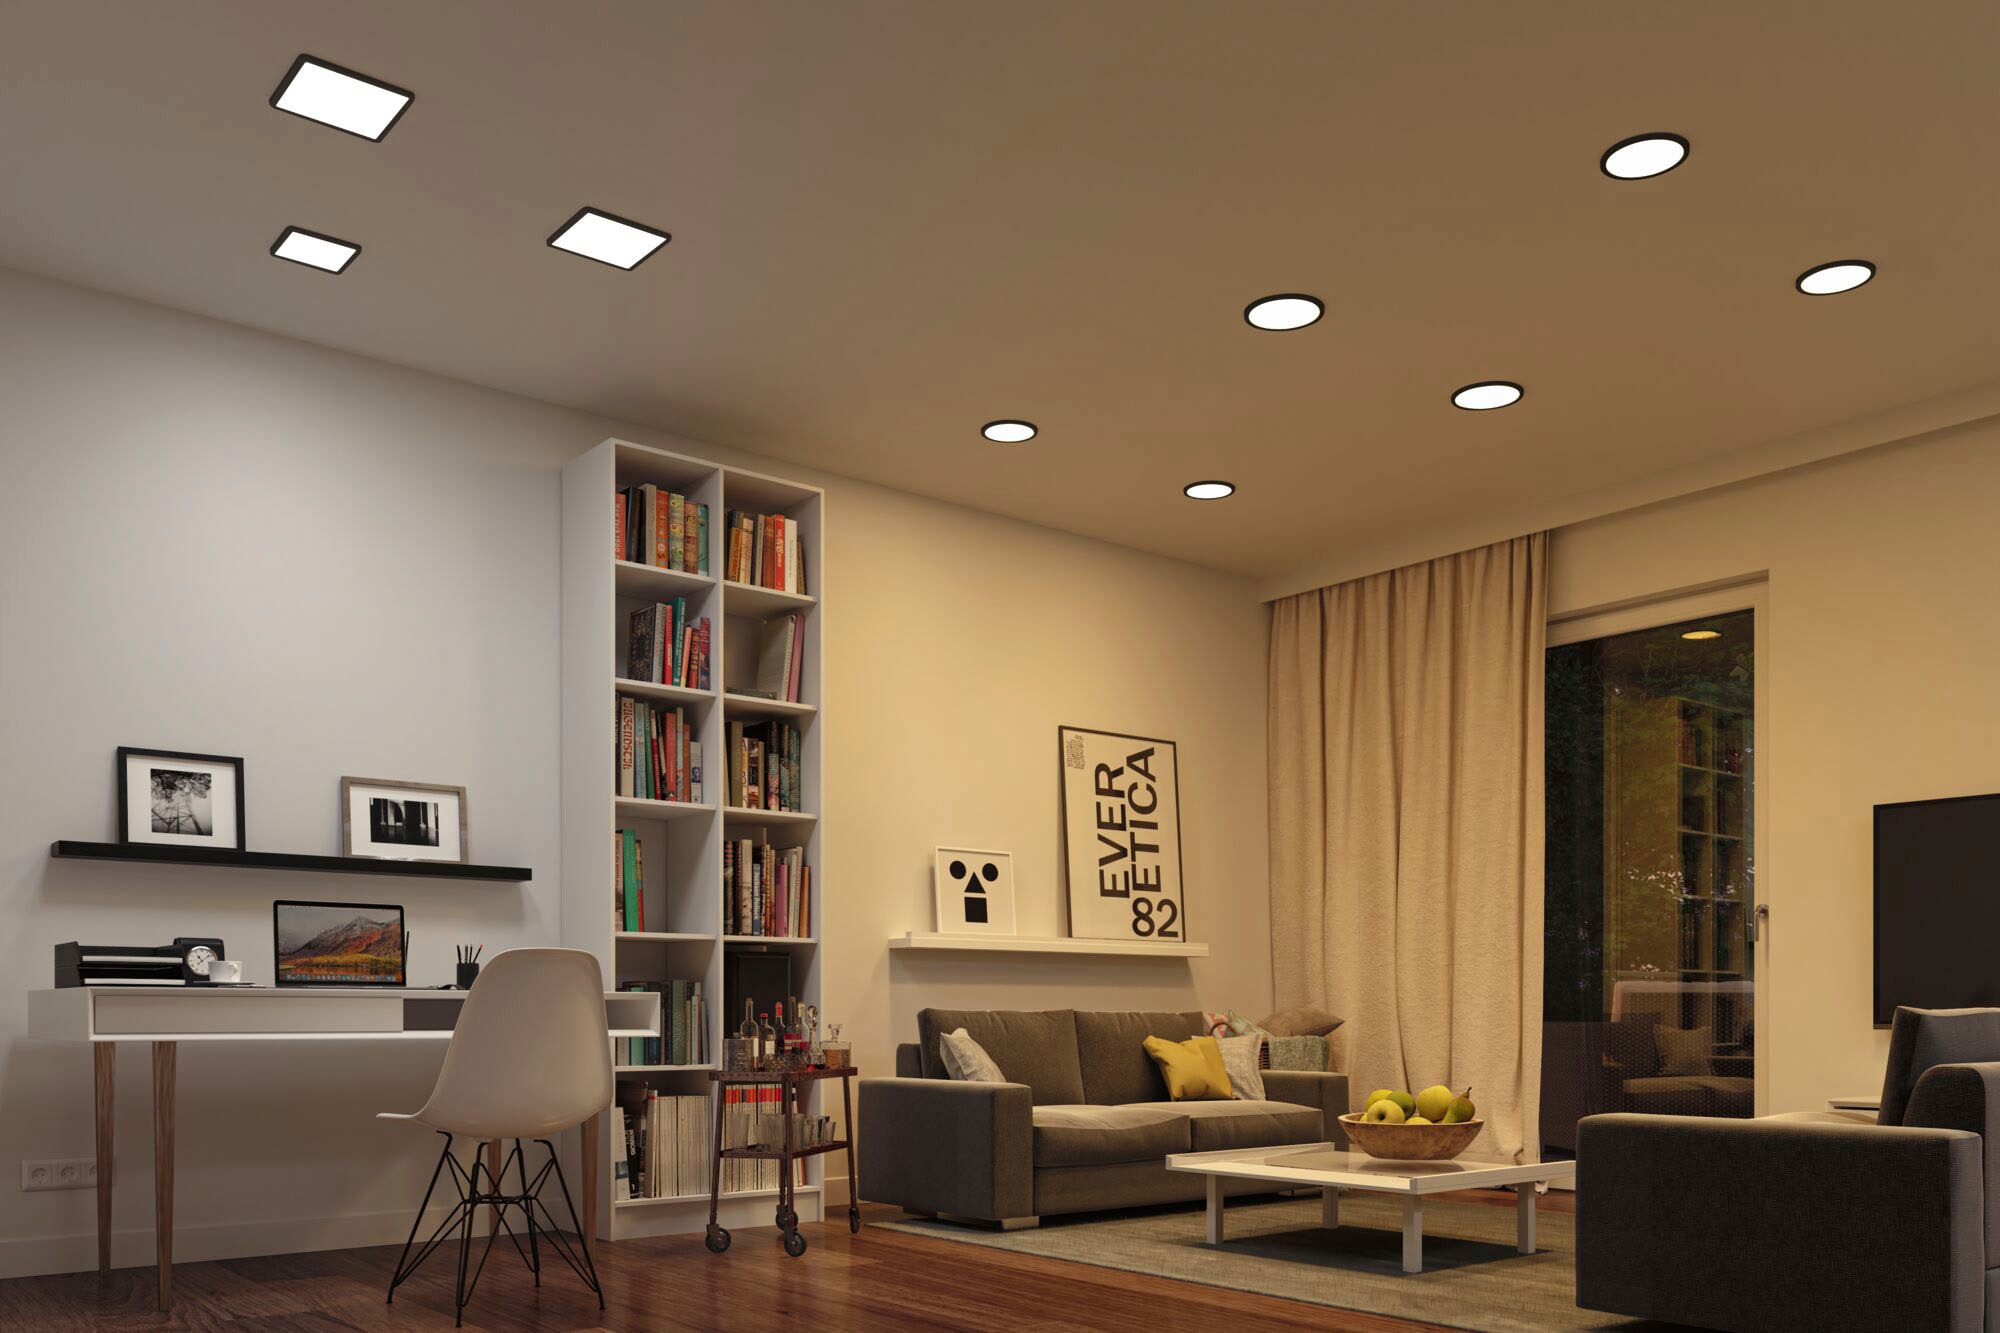 Paulmann LED Bad-Einbauleuchte »Areo«, Schutzart IP44 spritzwassergeschützt, Smart Home, dimmbar, Gr. ca. 17,5 x 17,5 cm